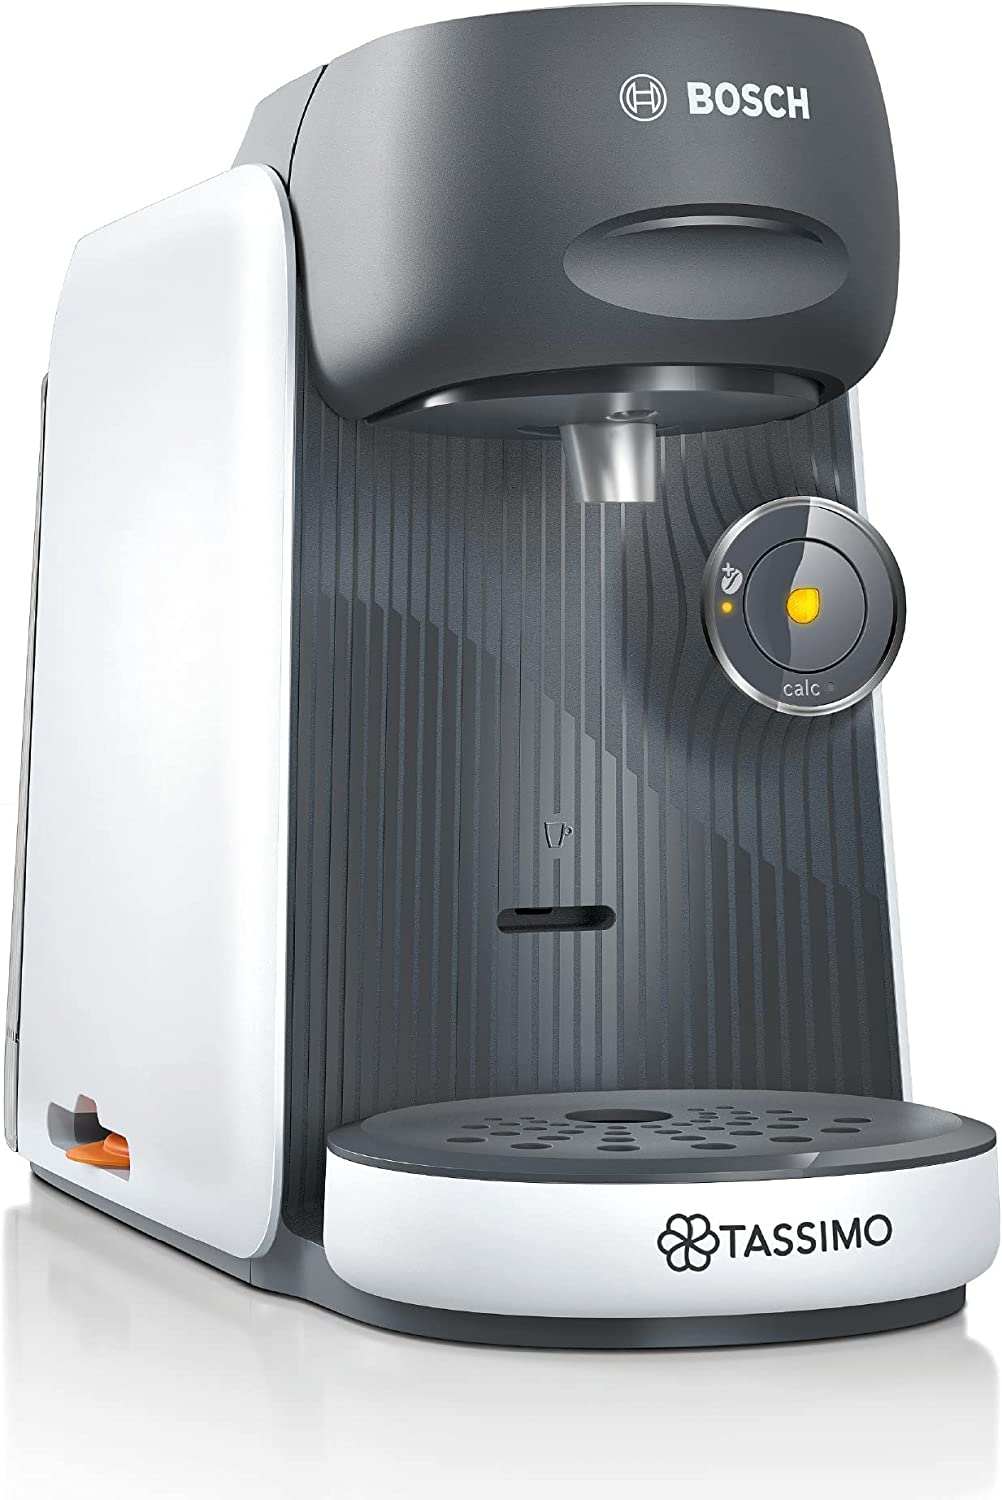 Tassimo Finesse Capsule Machine TAS16B4 Coffee Machine by Bosch, 70 Drinks, Intense Coffee at the Push, Automatic Shut-Off, Perfect Dosage, Space-Saving, 1400 W, White/Dark Grey